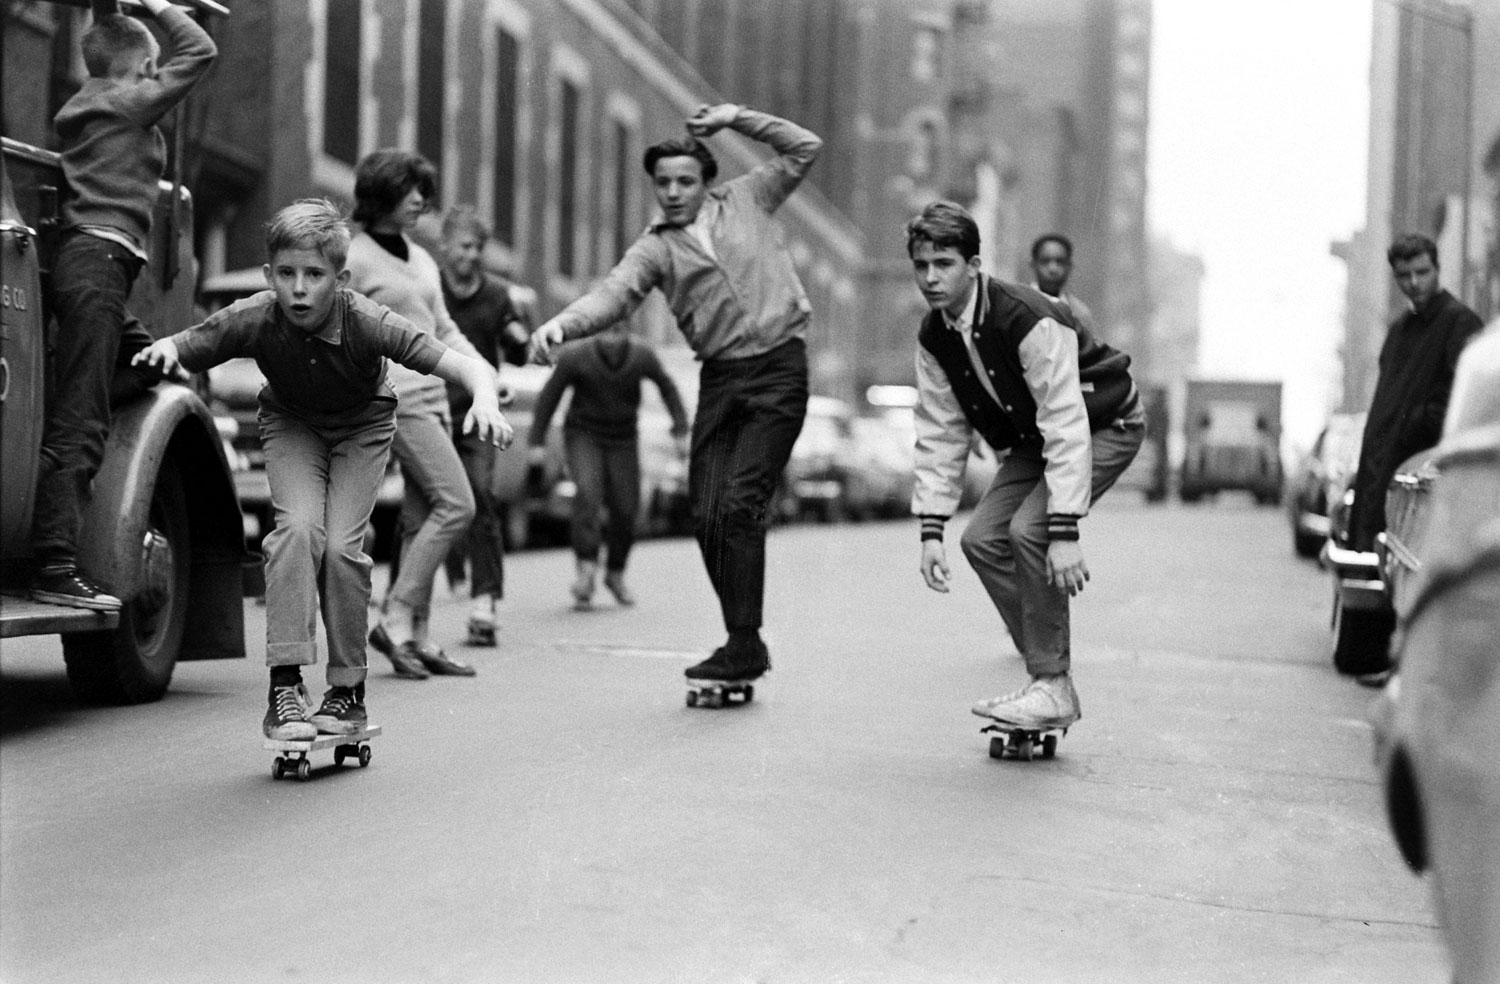 Skateboarding in New York City, 1965.